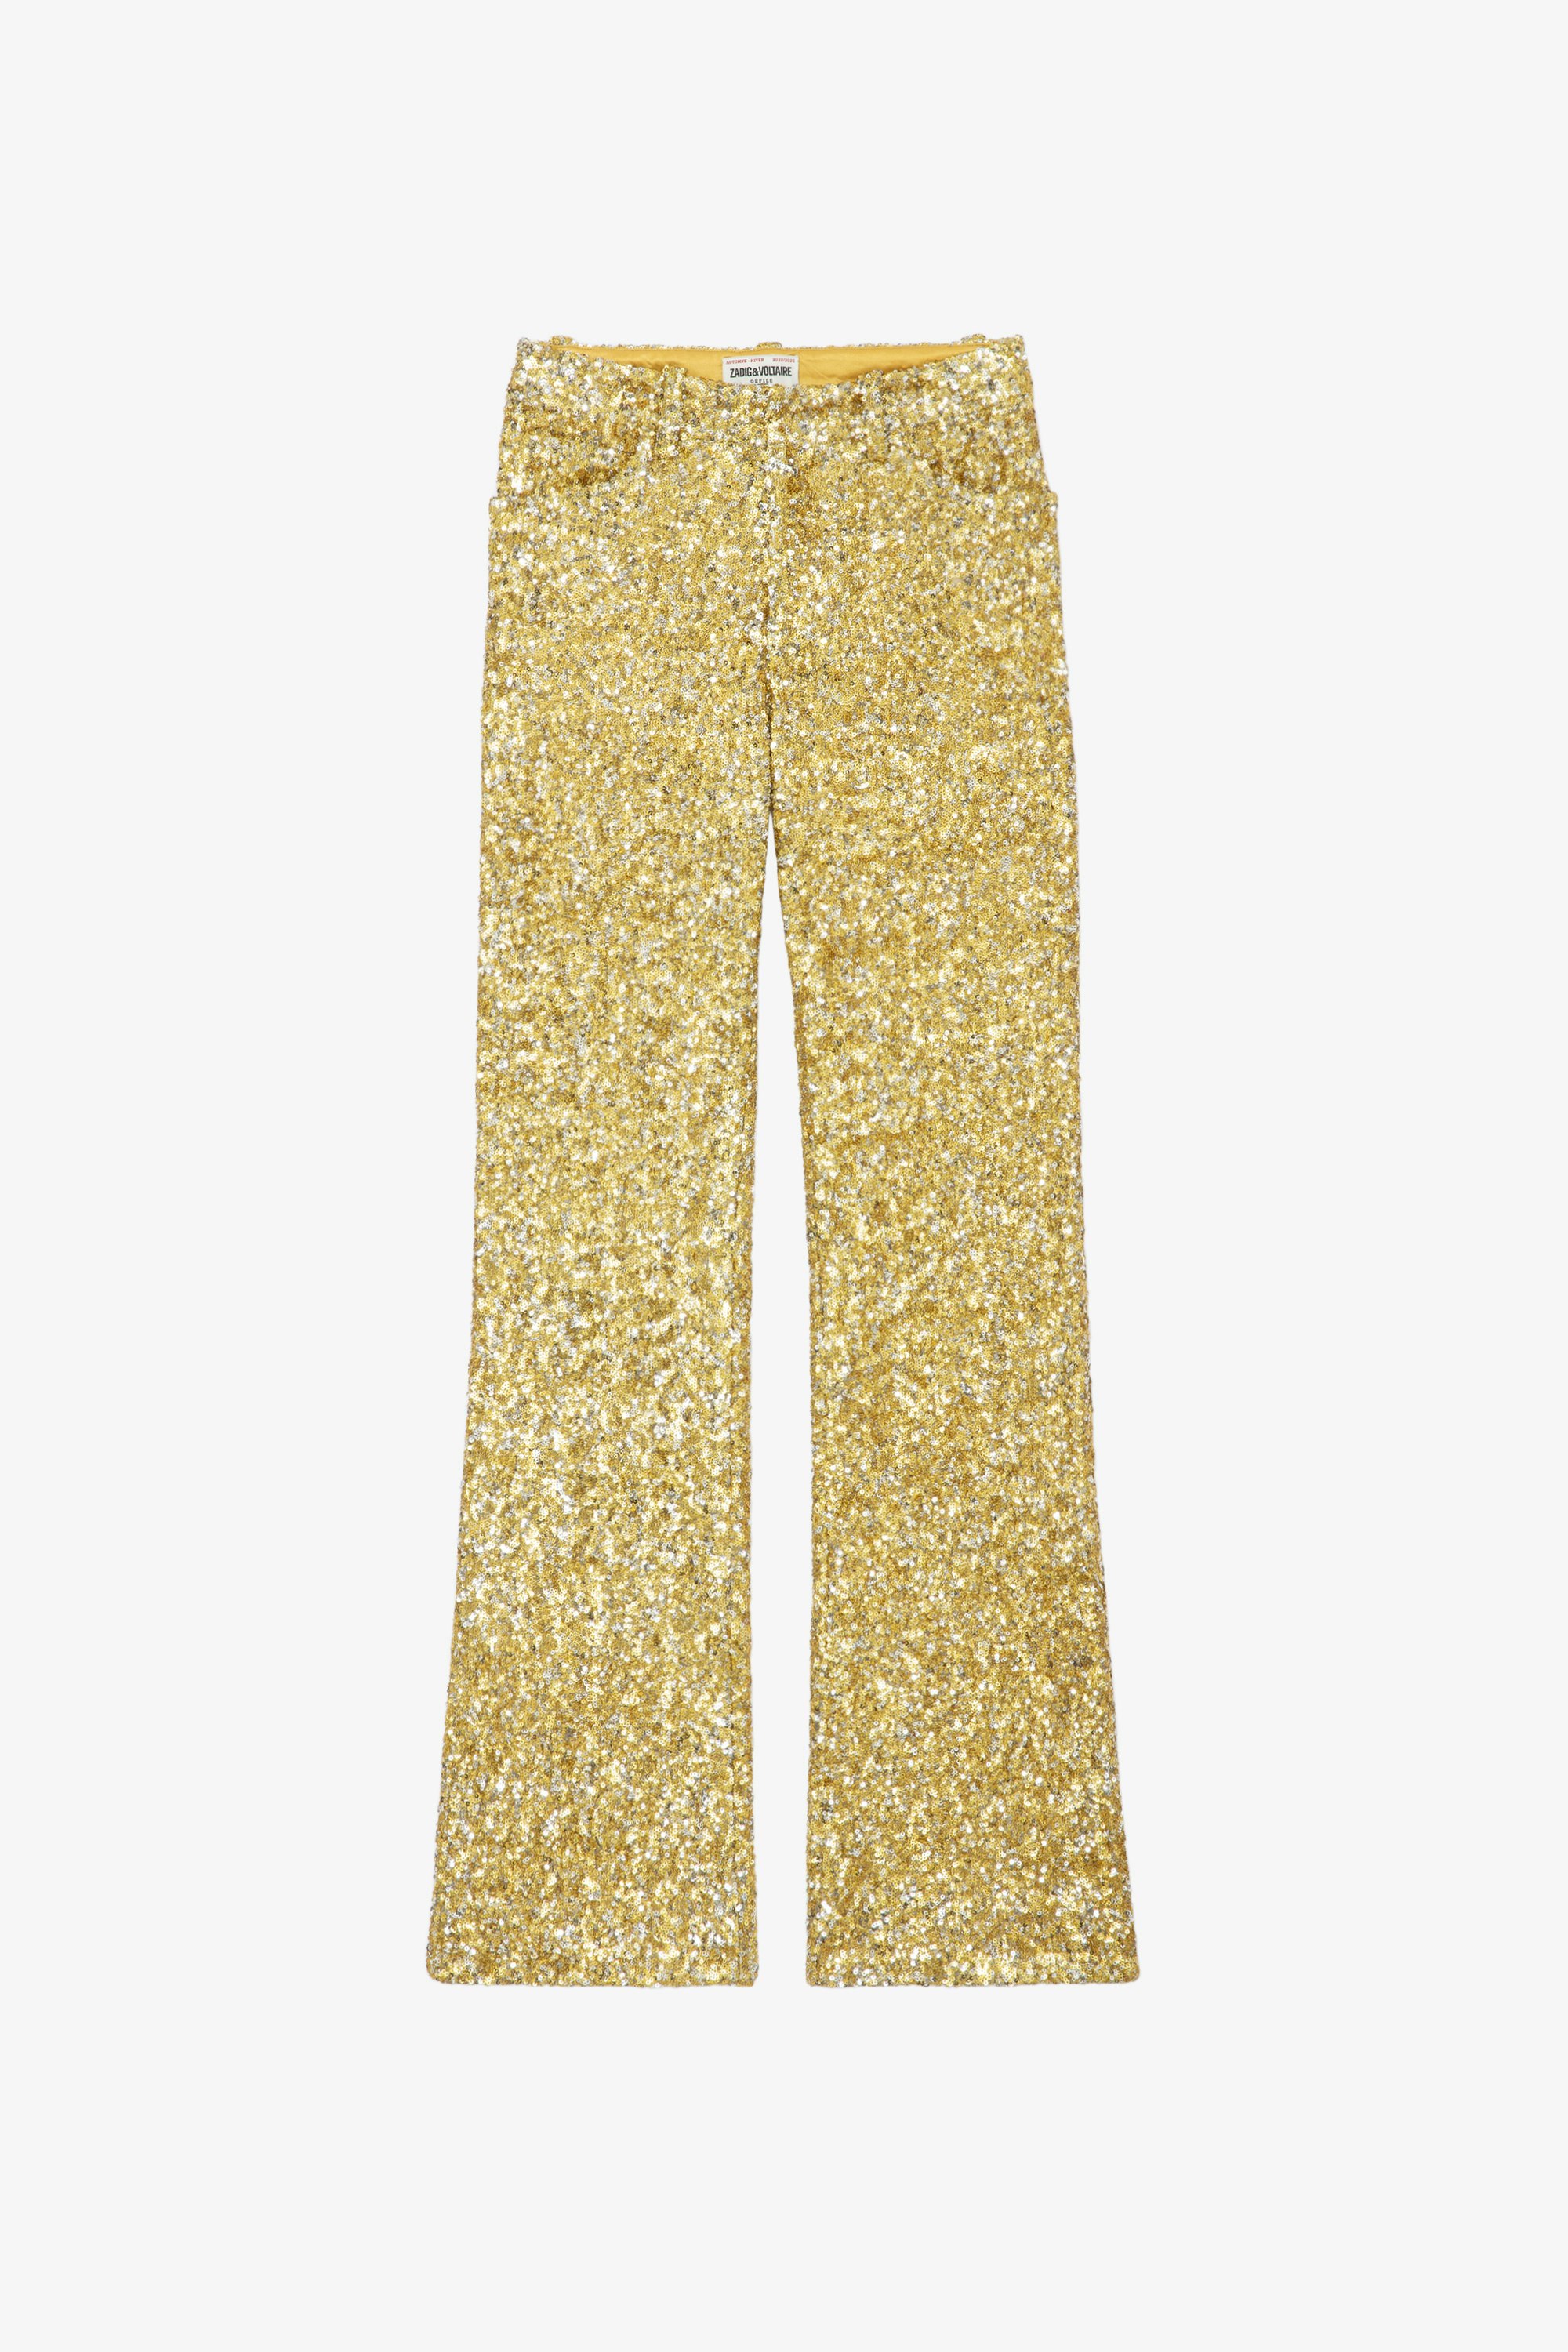 Pantaloni Pistol  Pantaloni sartoriali con paillettes oro donna  